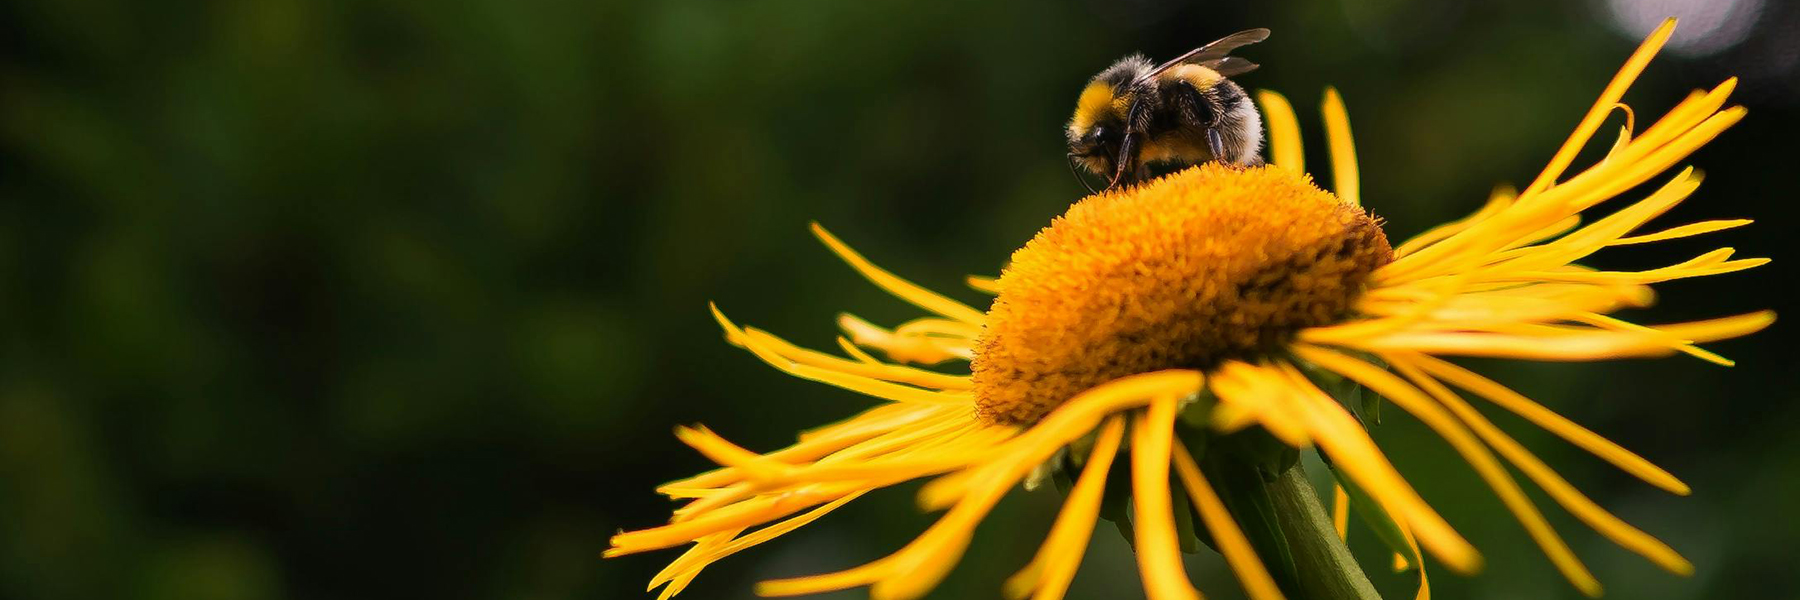 bumblebee on flower BANNER